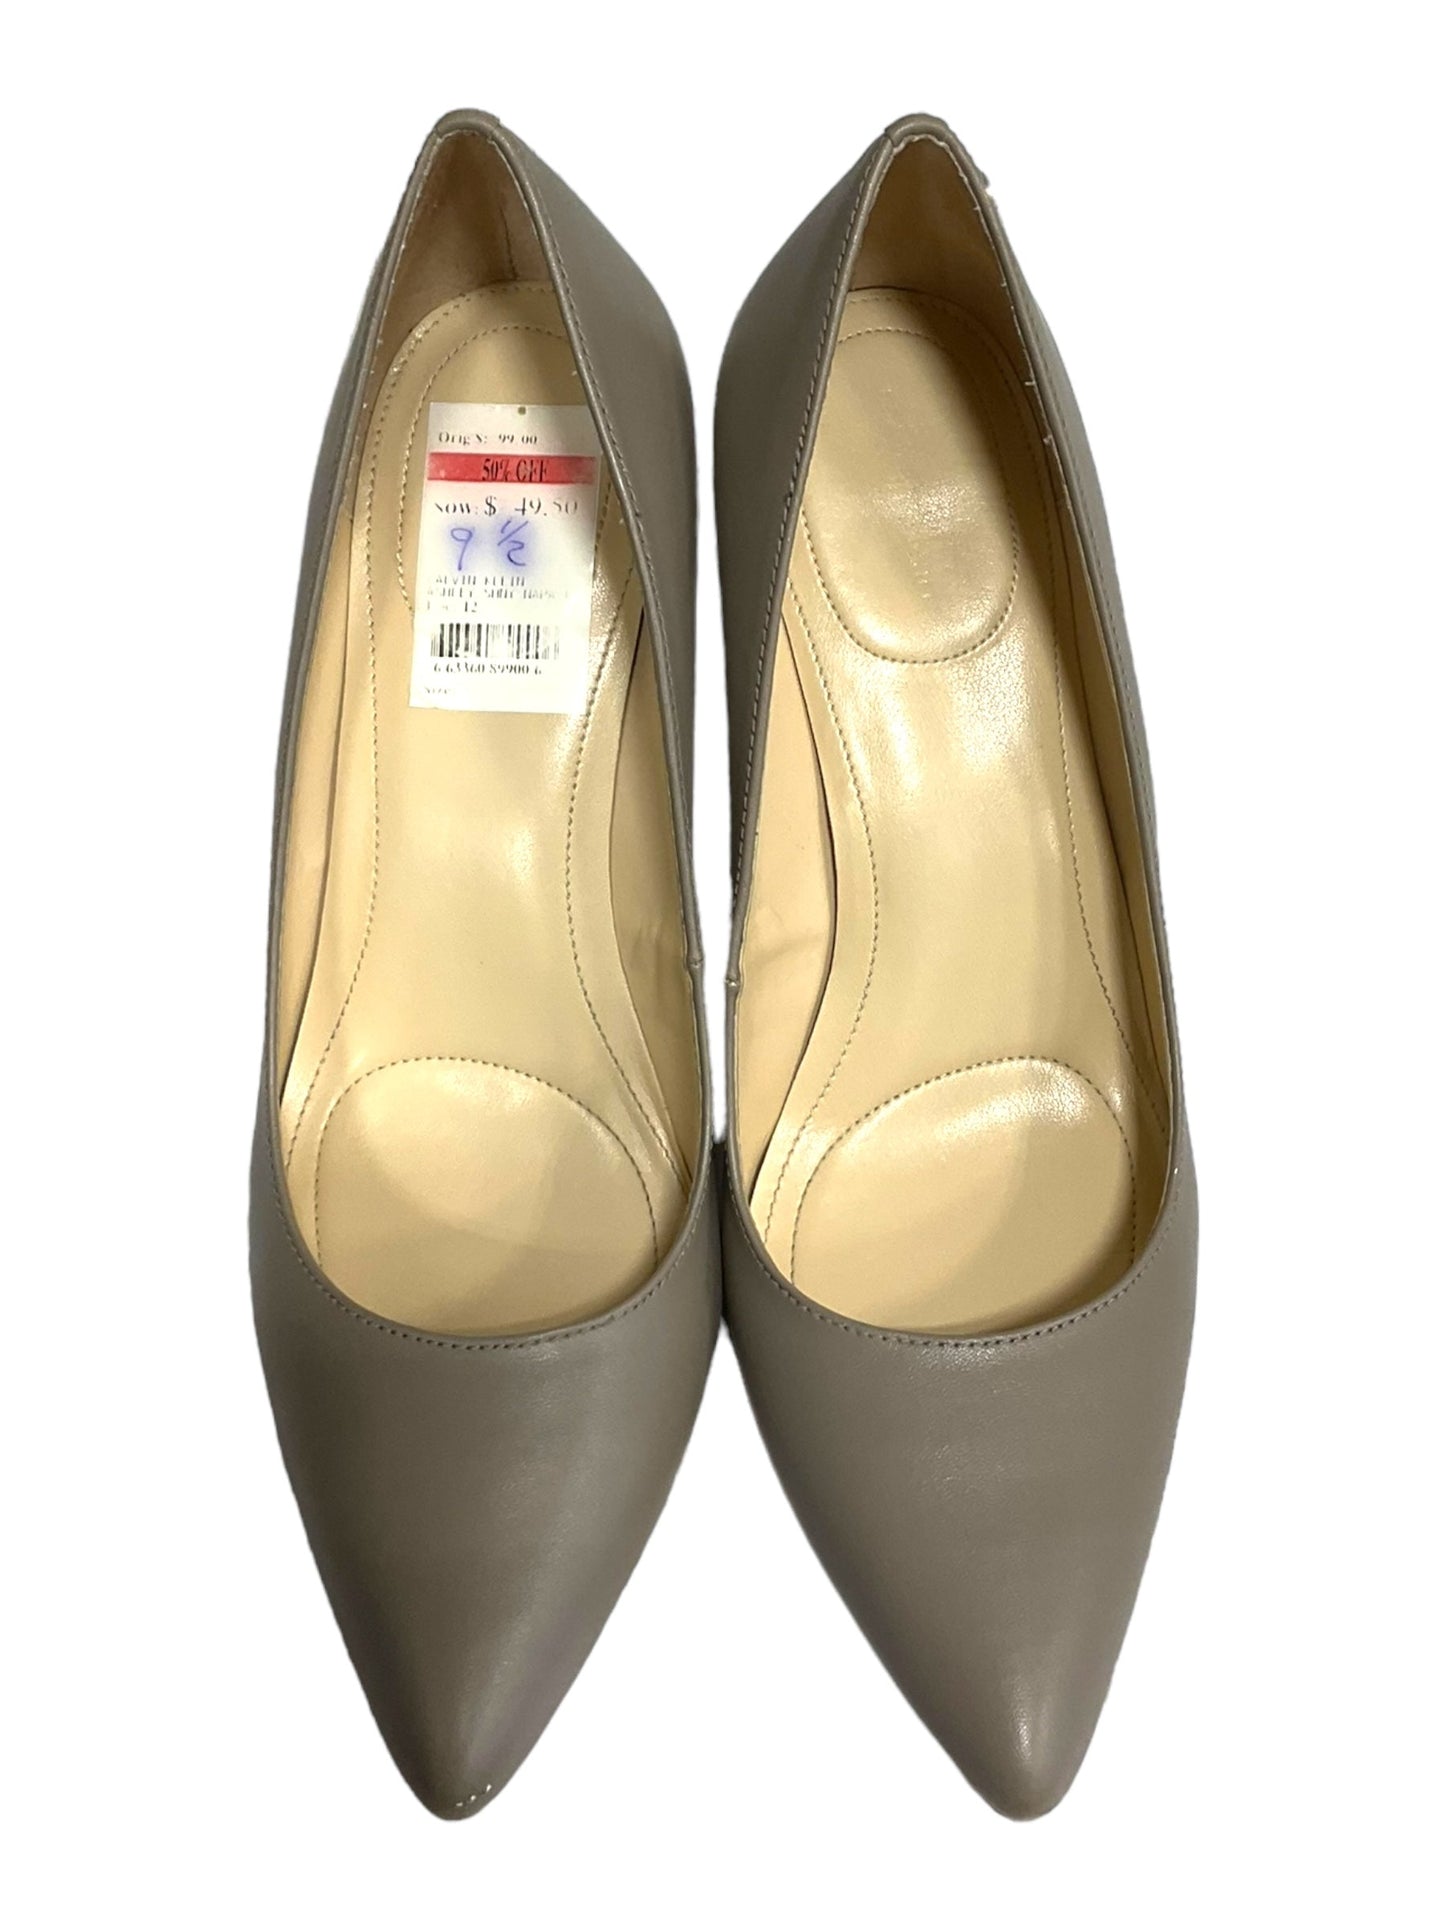 Taupe Shoes Heels Stiletto Calvin Klein, Size 9.5